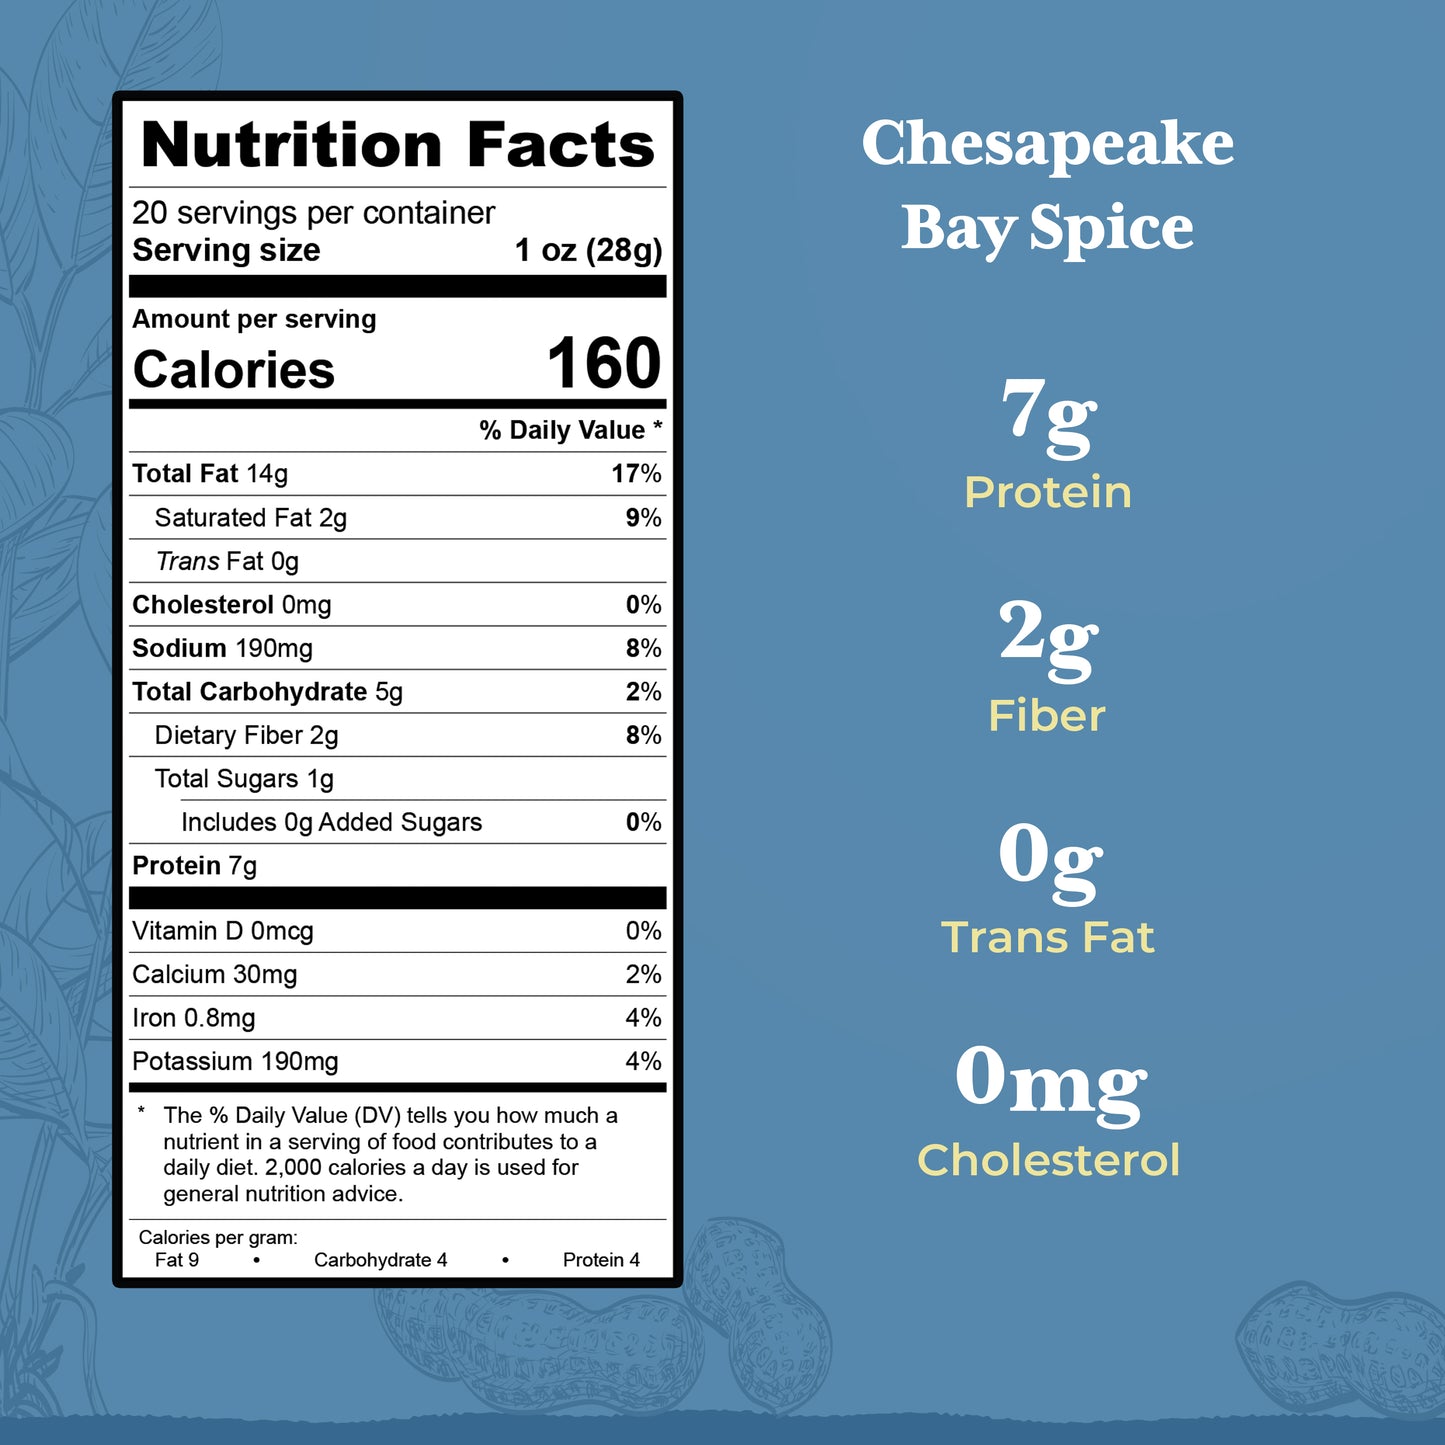 Chesapeake Bay Spice